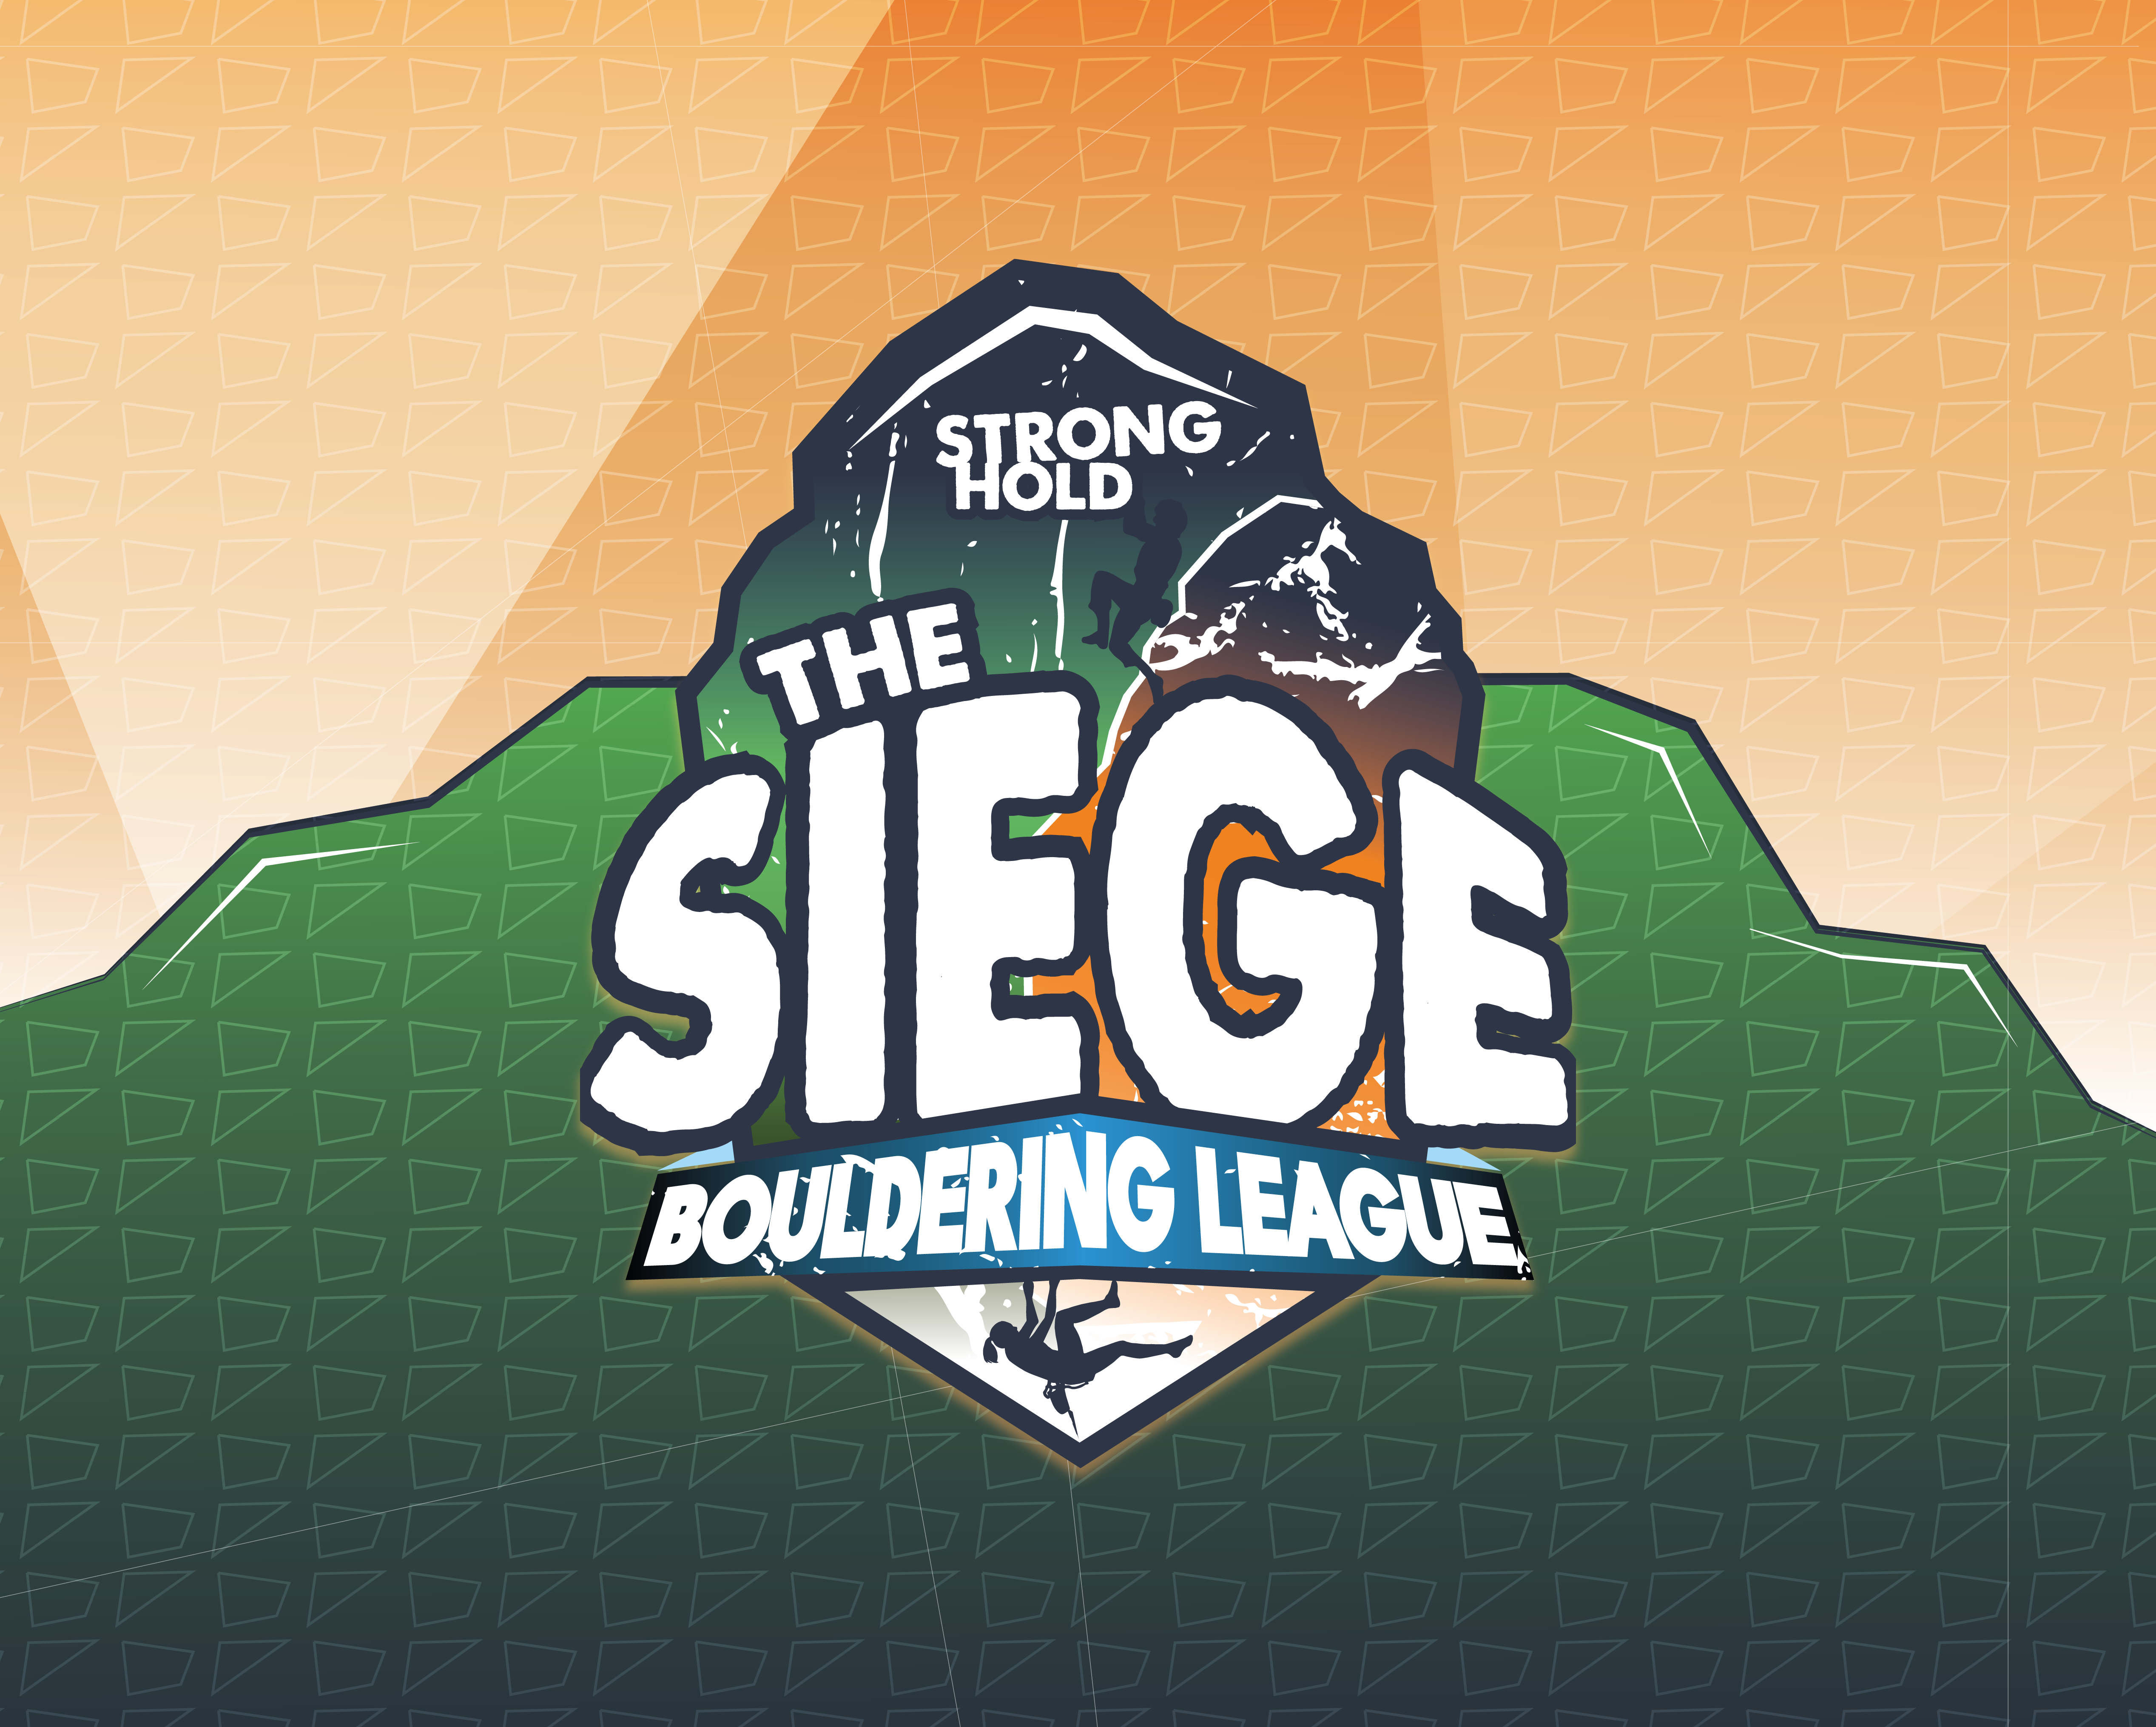 the siege indoor bouldering league logo